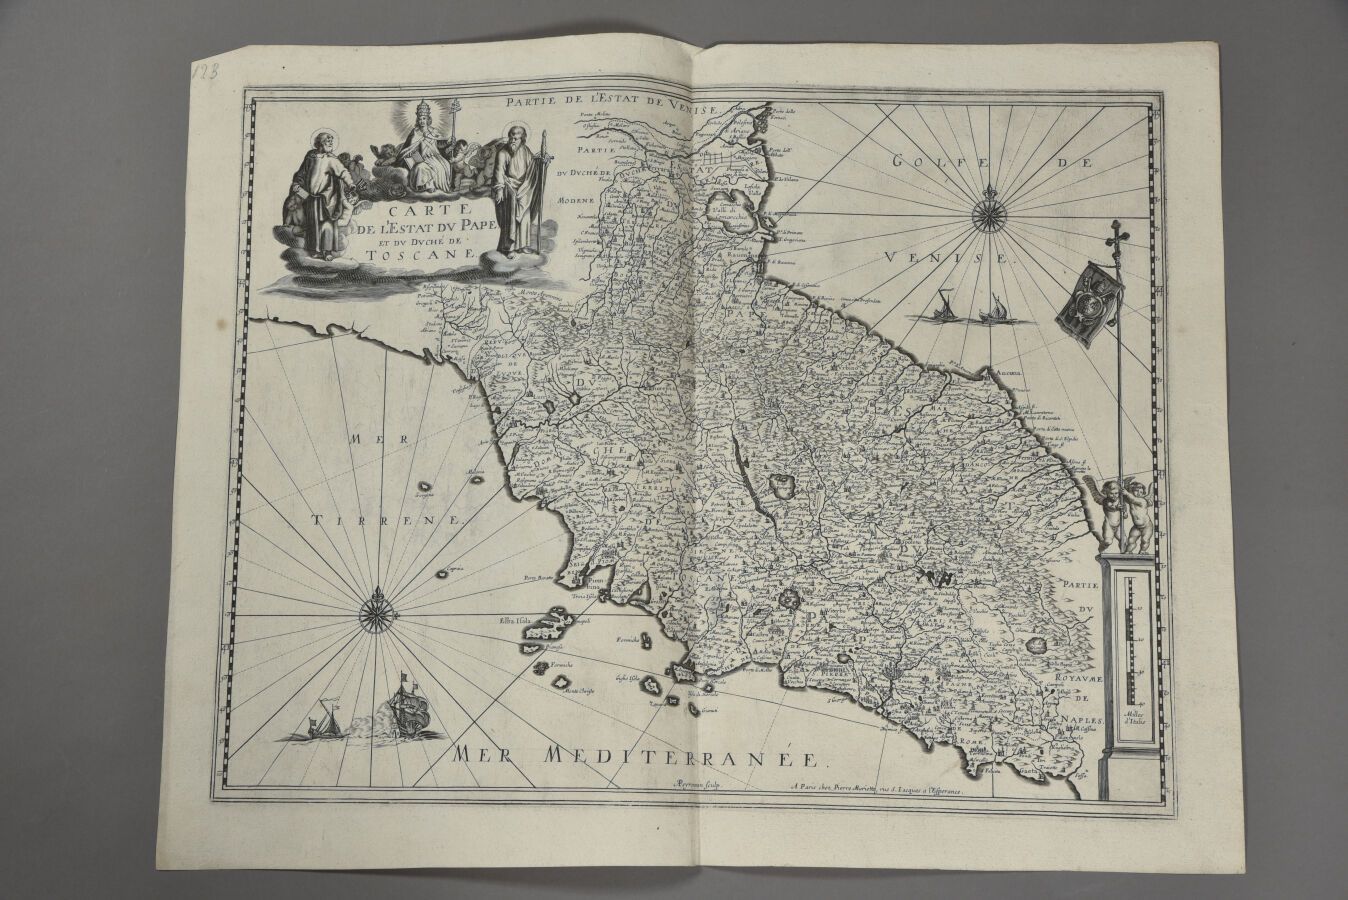 Null 十七世纪的制图师。
教皇国地图，由皮埃尔-马里特出版。 
十七世纪。 
纸张：高42厘米-长53厘米。 
沿着背面的斜面有一些污点。